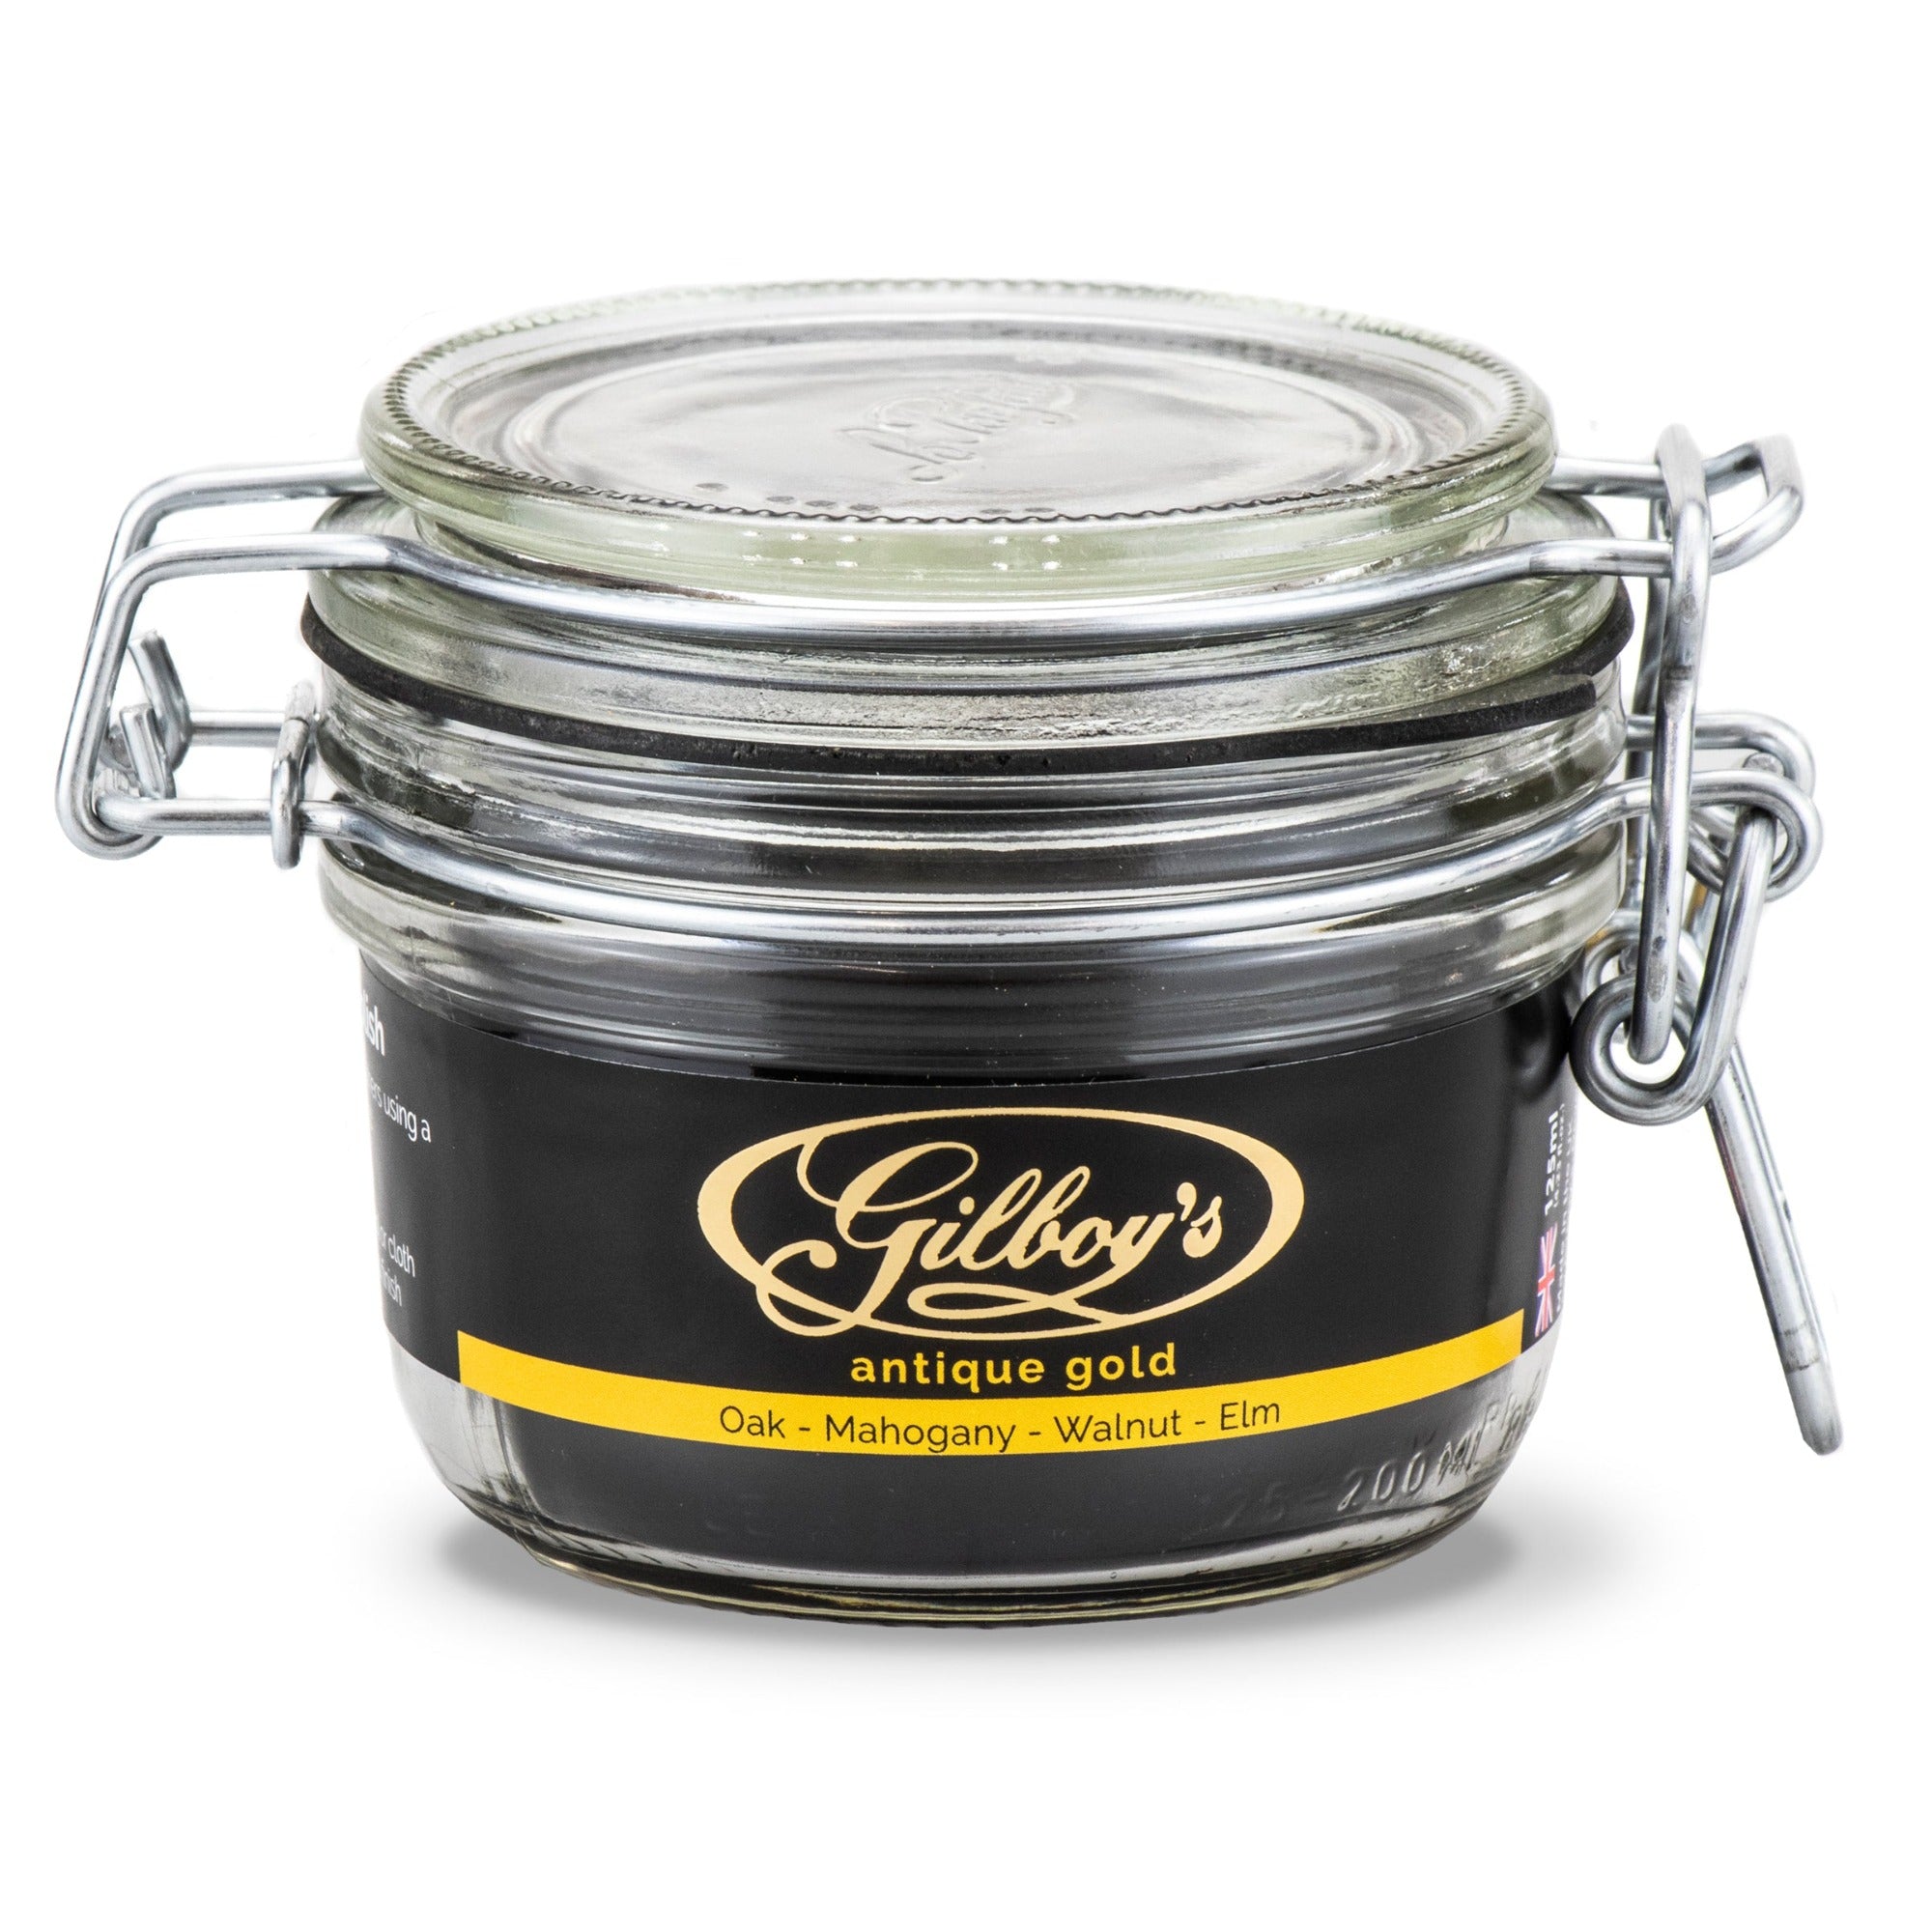 Gilboys antique gold beeswax furniture polish 125ml le parfait clip-top glass jar